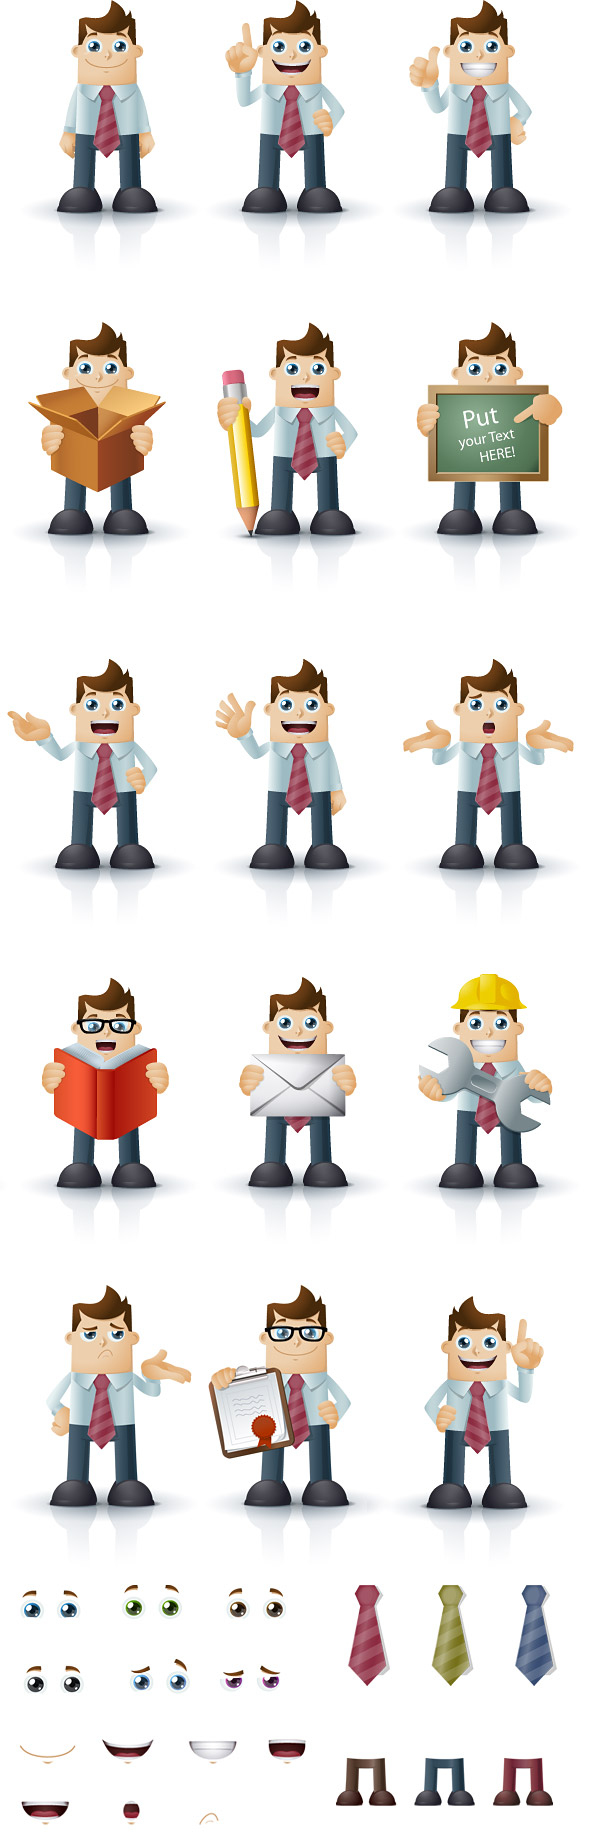 14 Cartoon Businessman Characters - Vector Characters